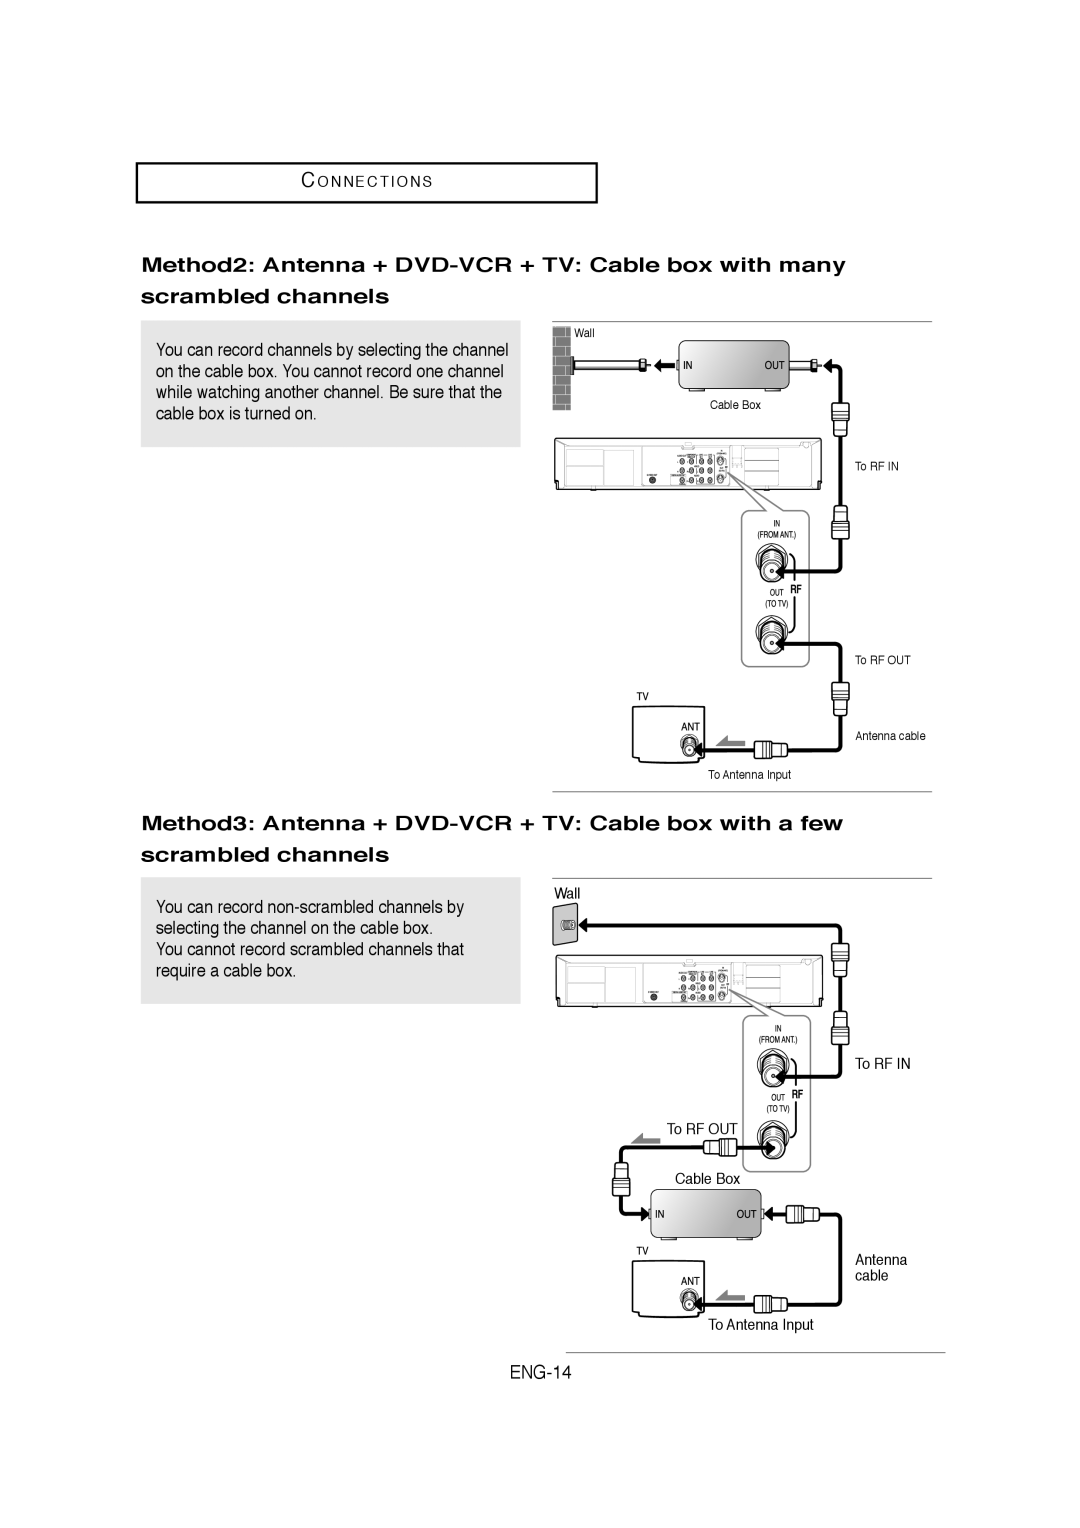 Samsung 01304A Method2 Antenna + DVD-VCR + TV Cable box with many scrambled channels, C O N N E C T I O N S, Wall 